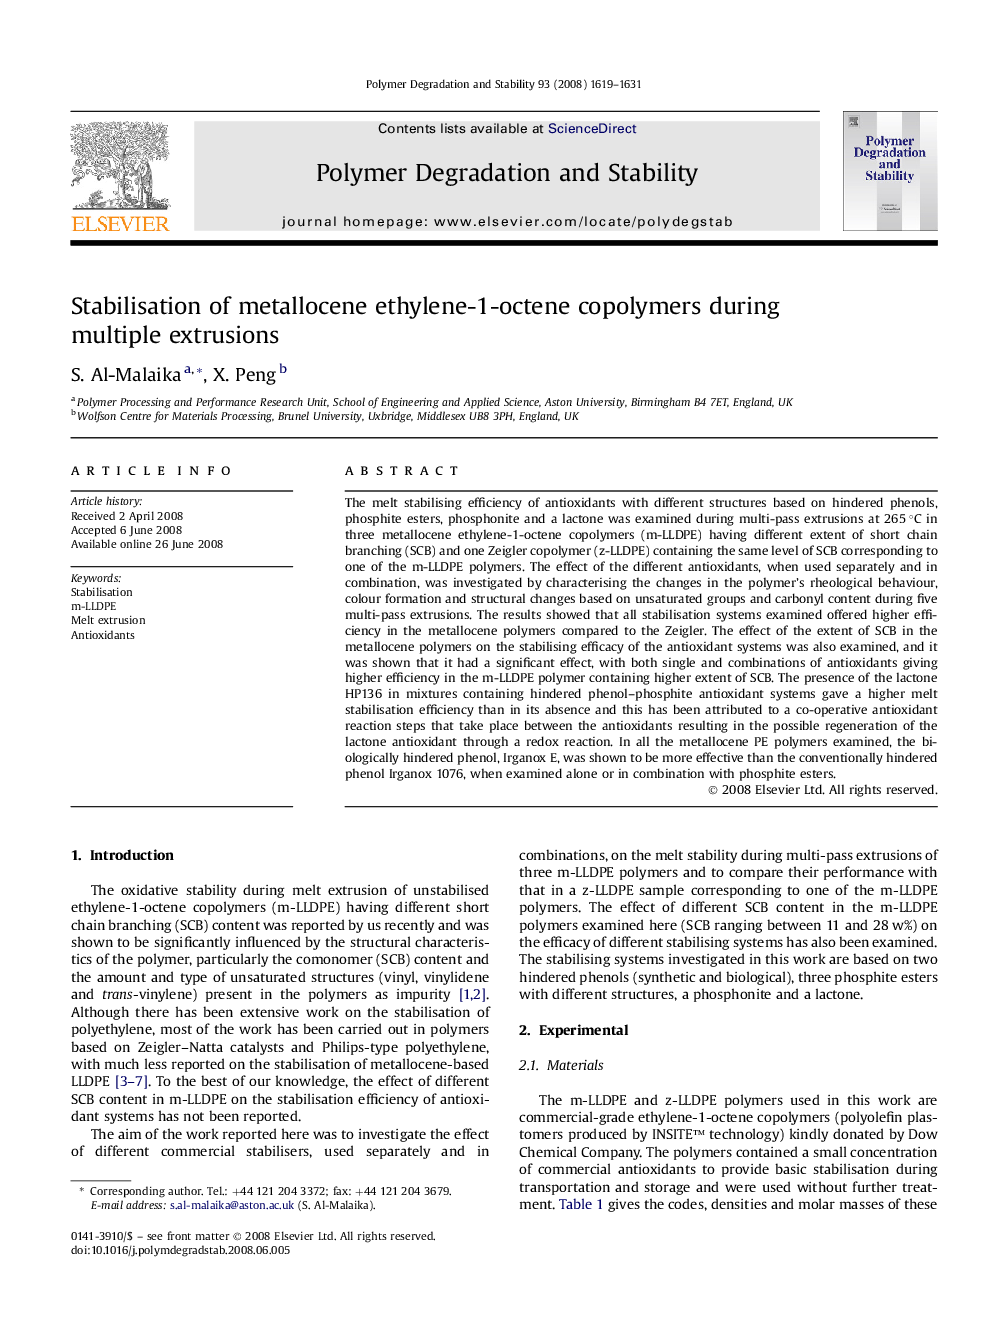 Stabilisation of metallocene ethylene-1-octene copolymers during multiple extrusions